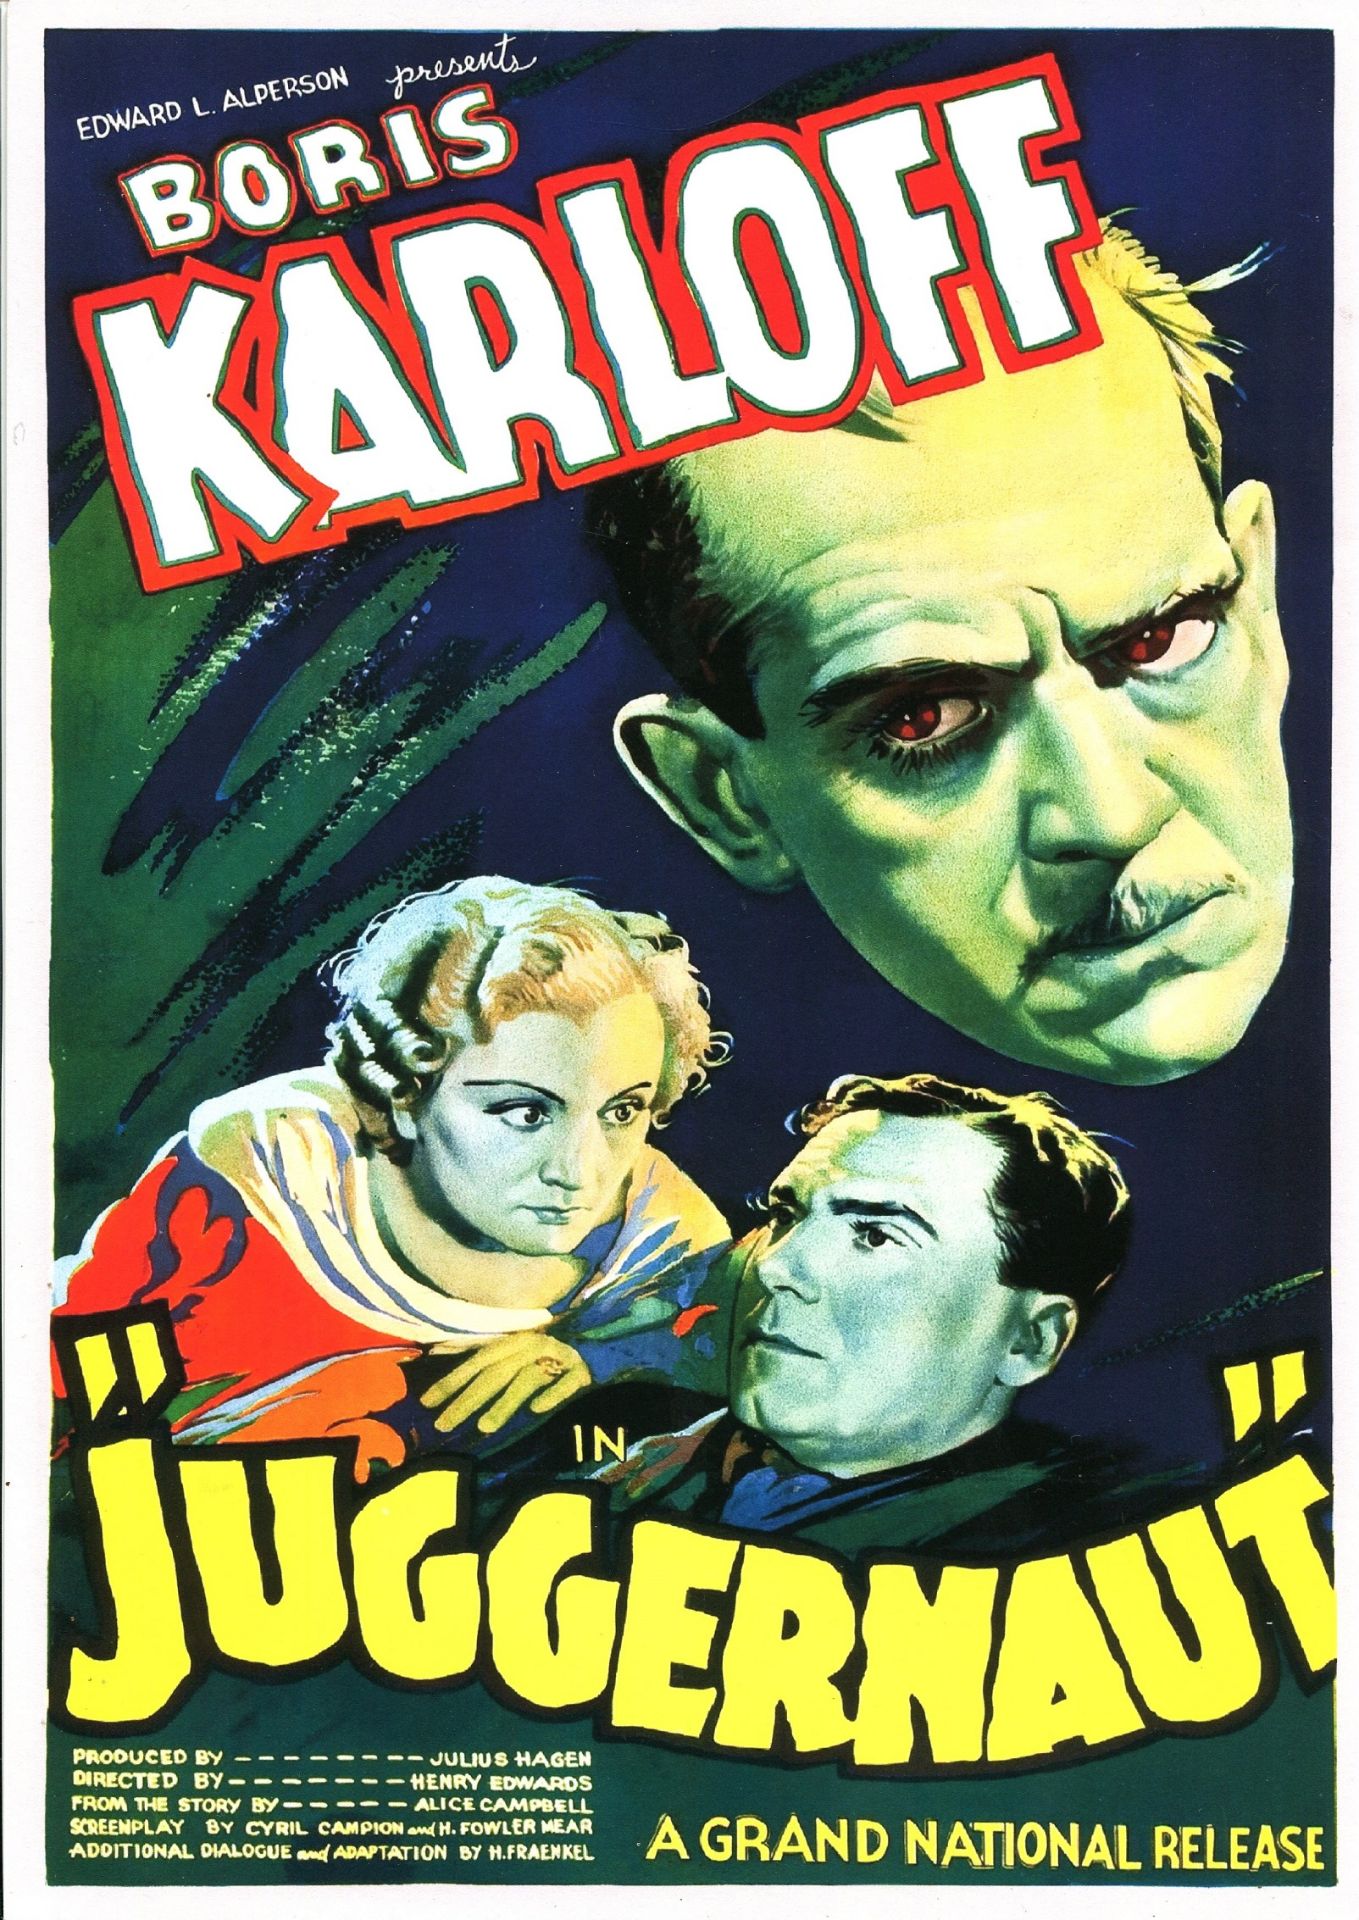 JUGGERNAUT: Boris Karloff (1887-1969) English actor, - Image 3 of 3